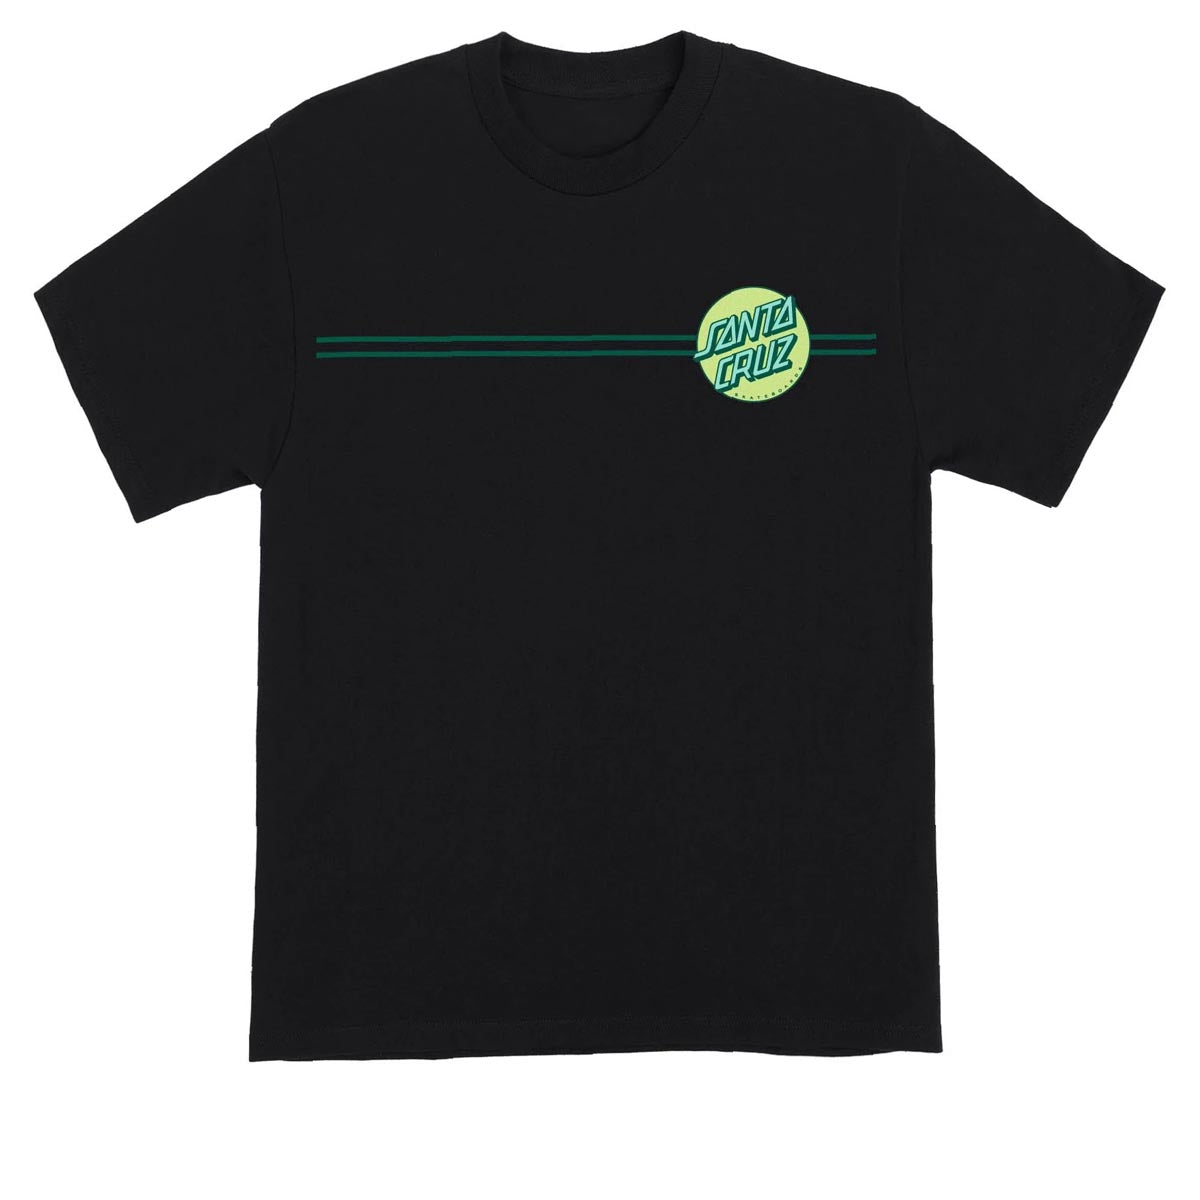 Santa Cruz Other Dot T-Shirt - Black/Key Lime image 2